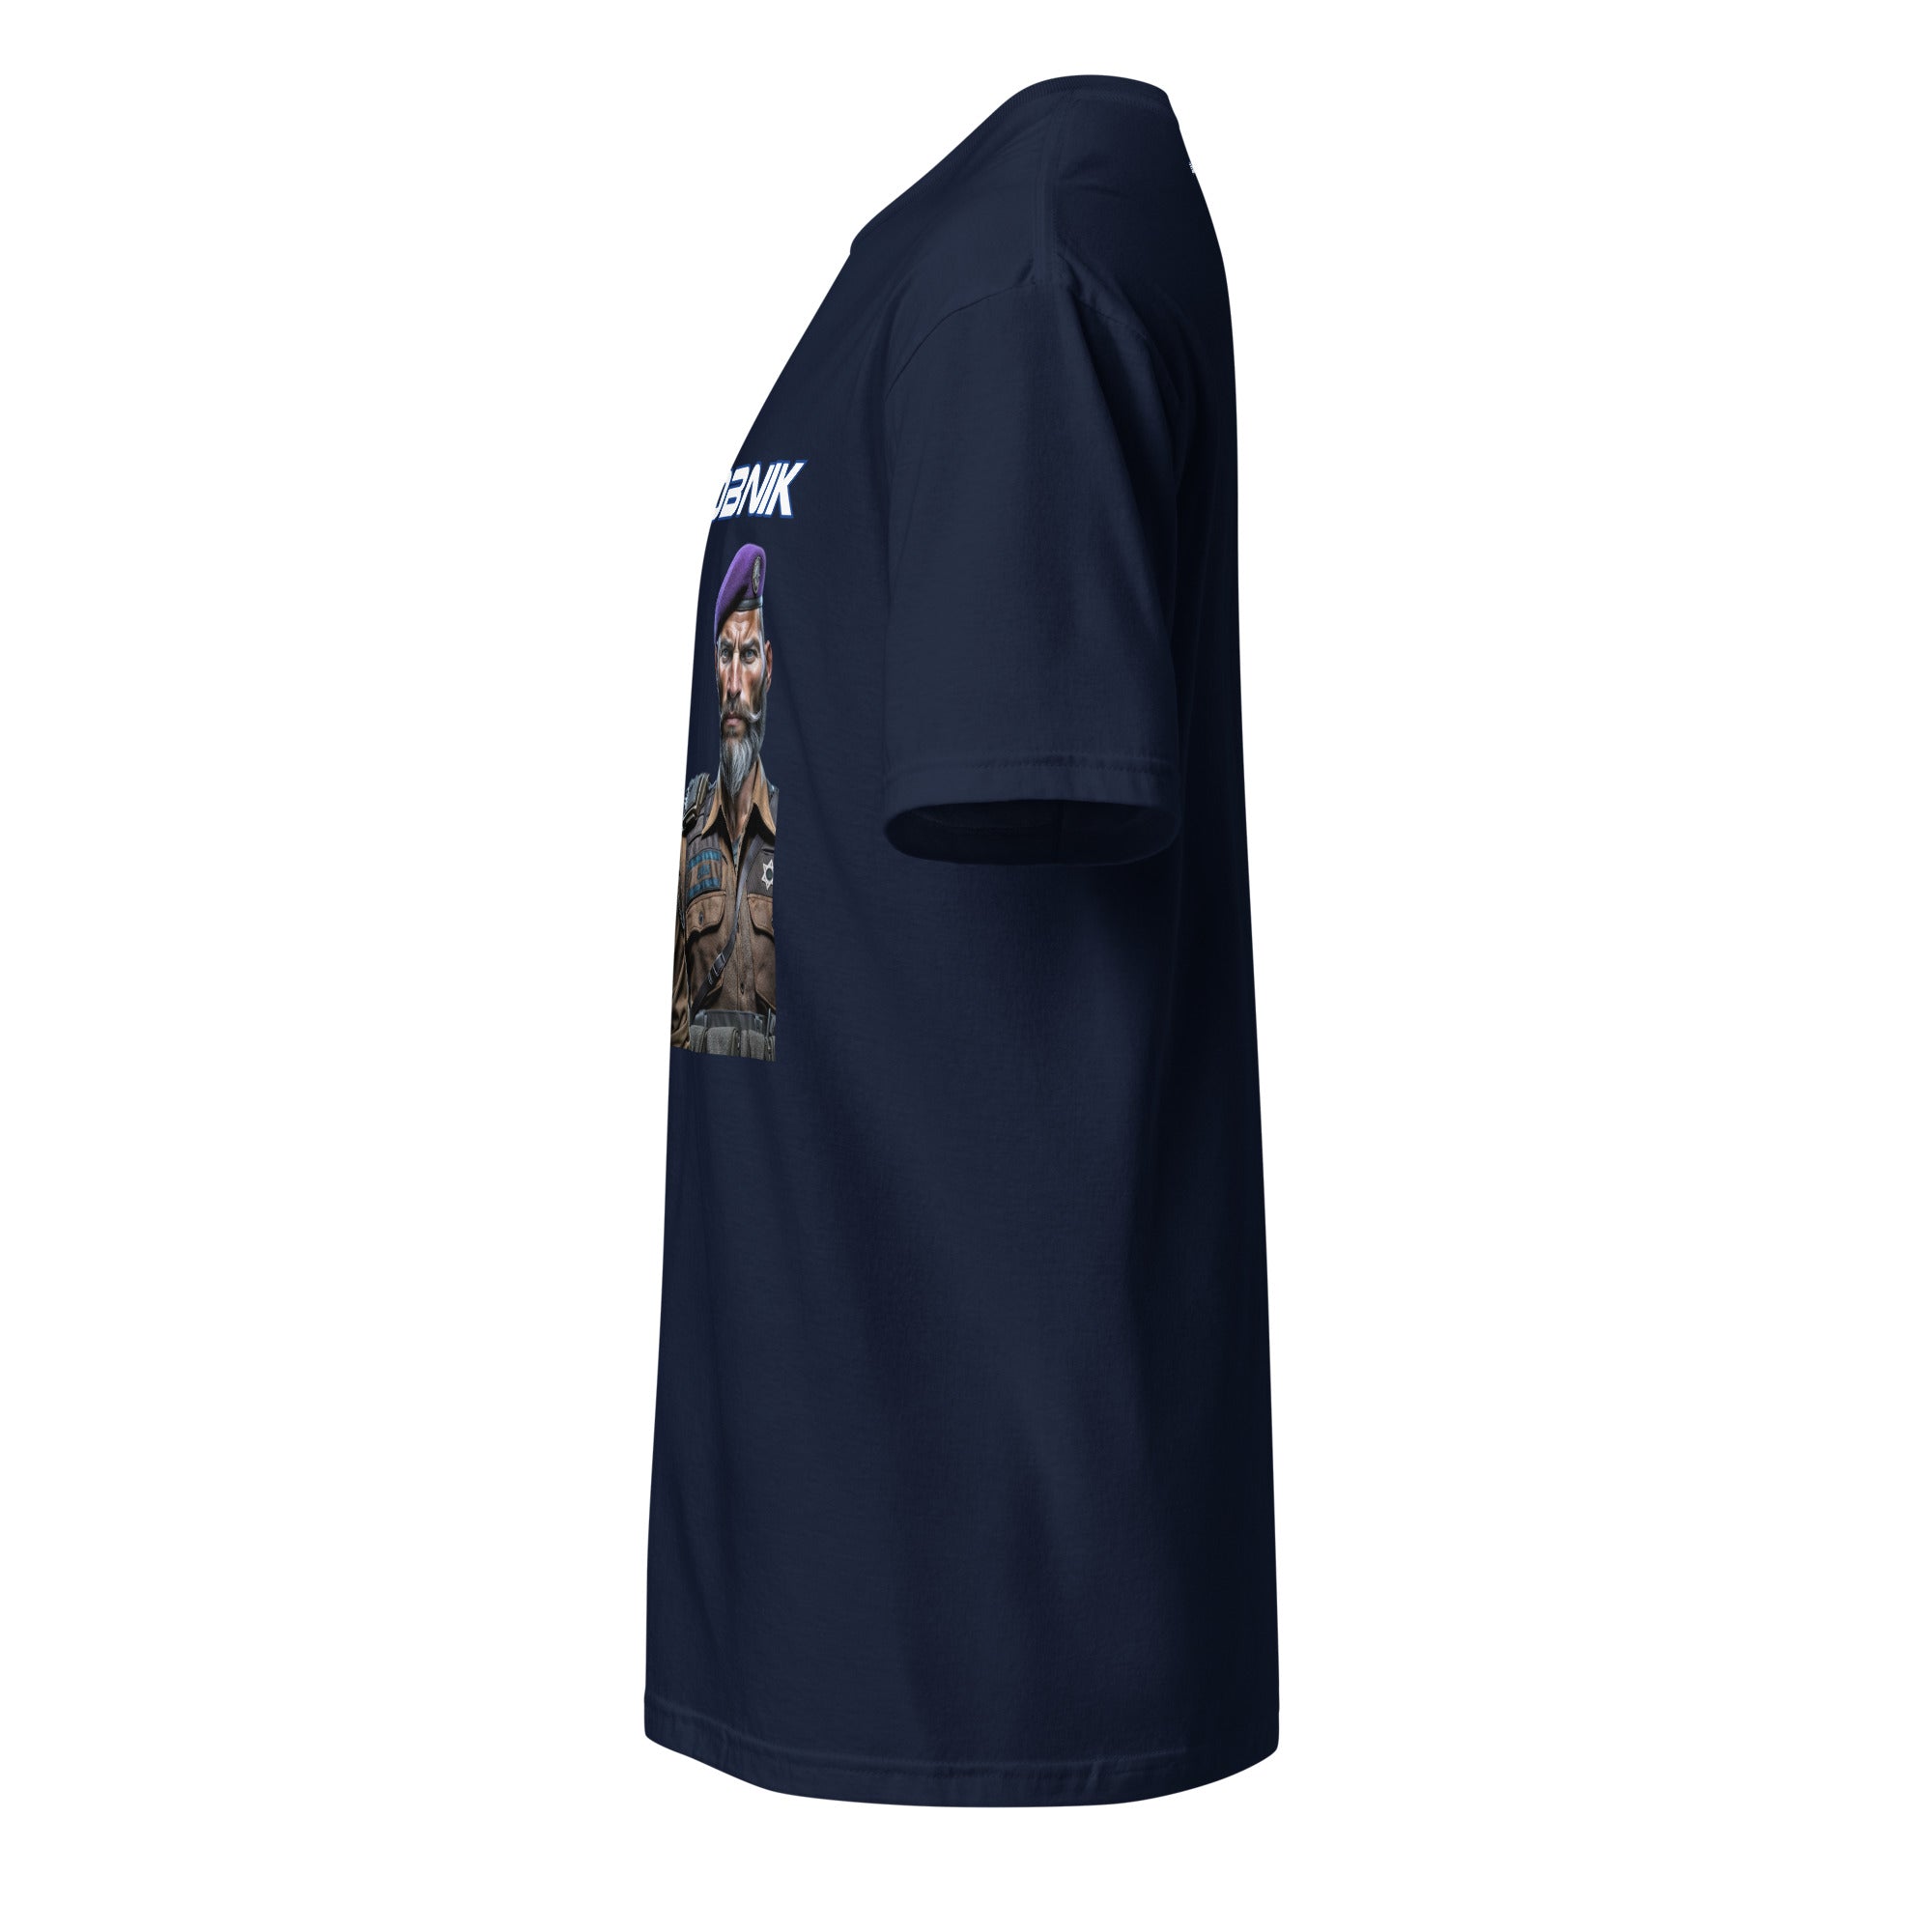 Dajobnik Official Unisex T-Shirt Navy 03 | Dajobnik